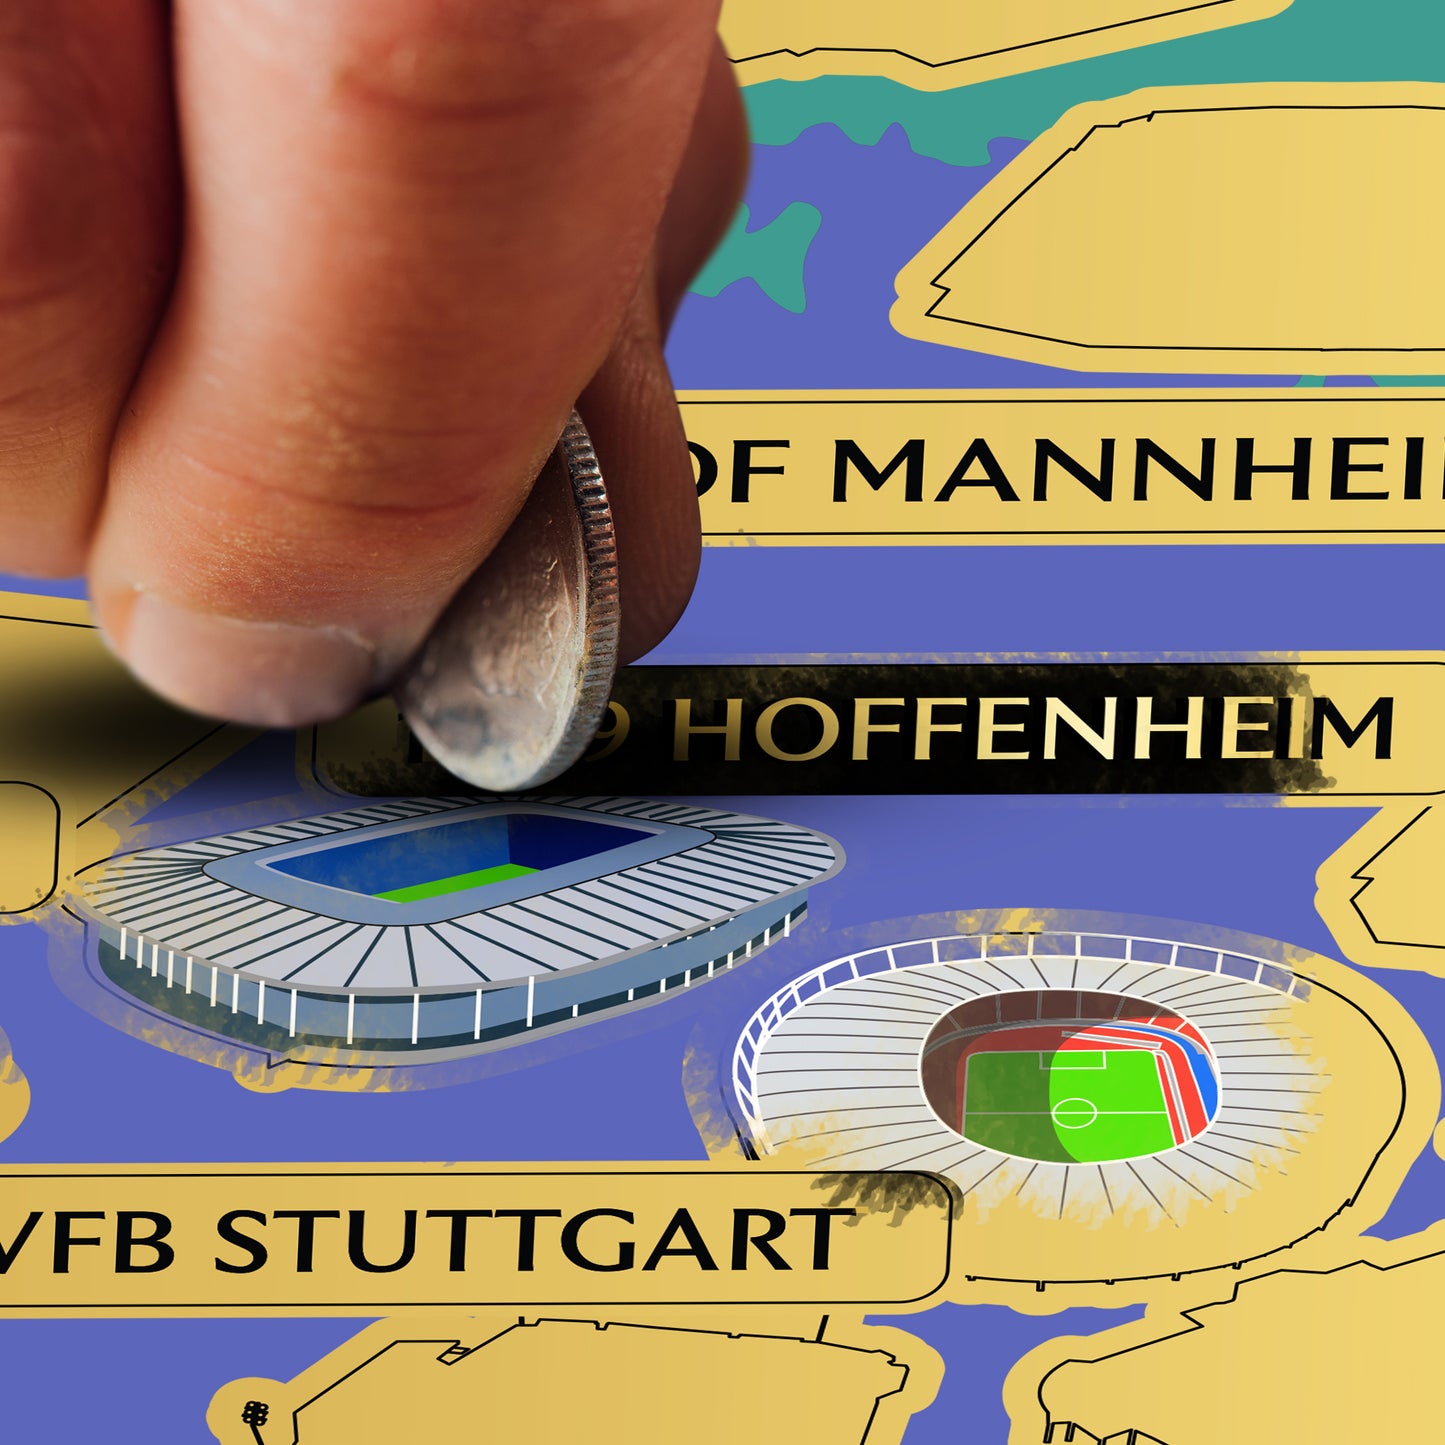 Germany Football Stadium Map